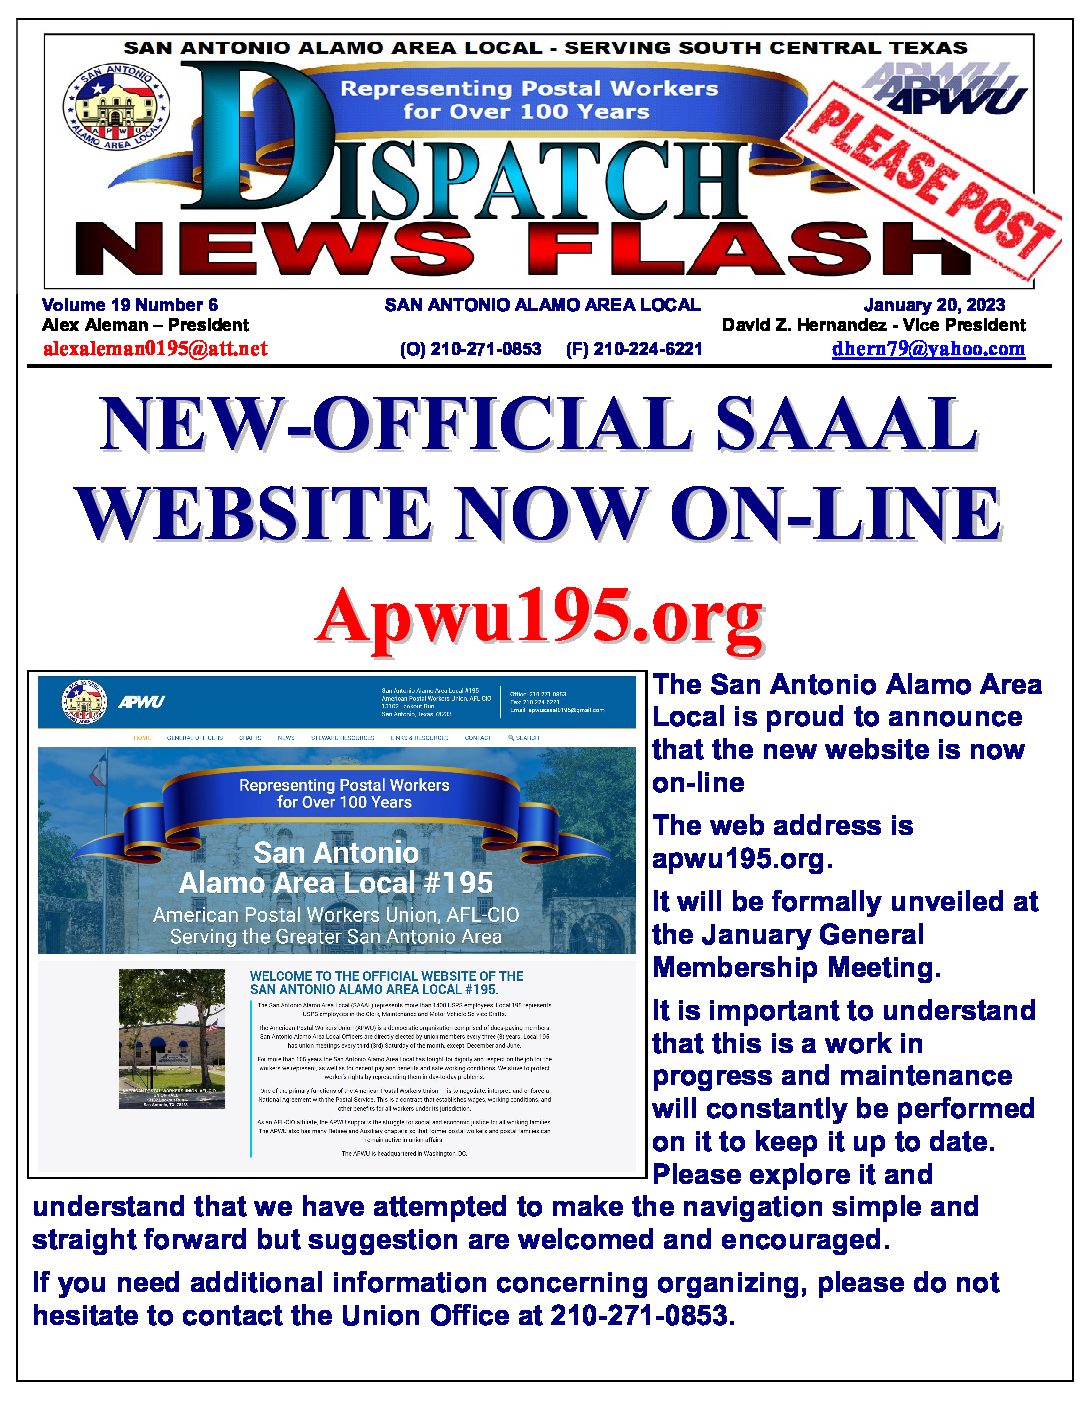 NewsFlash 19-6 – SAAAL Website Now On-Line - 